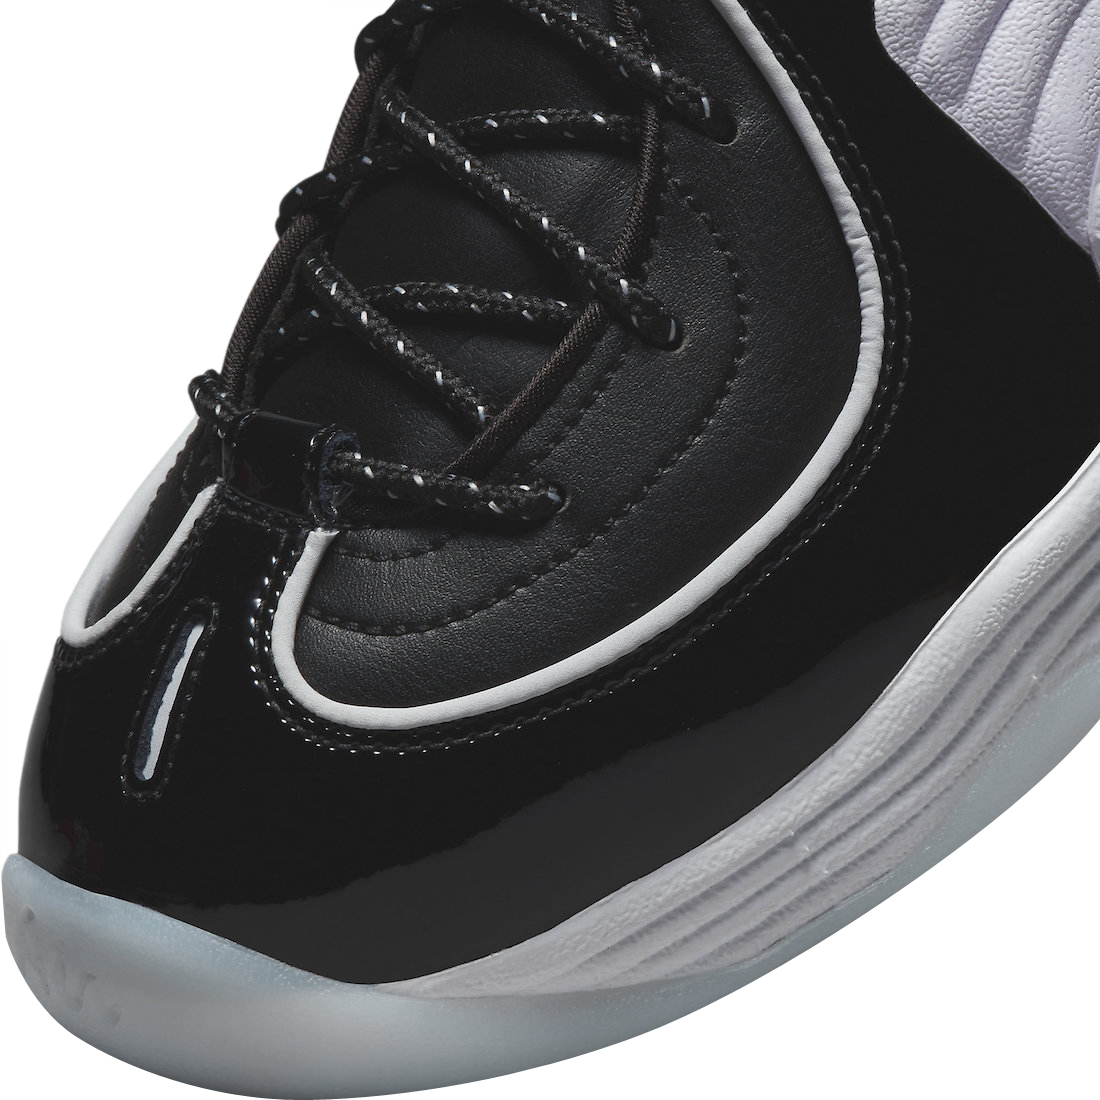 Nike Air Penny 2 Black Patent DV0817-001 - KicksOnFire.com